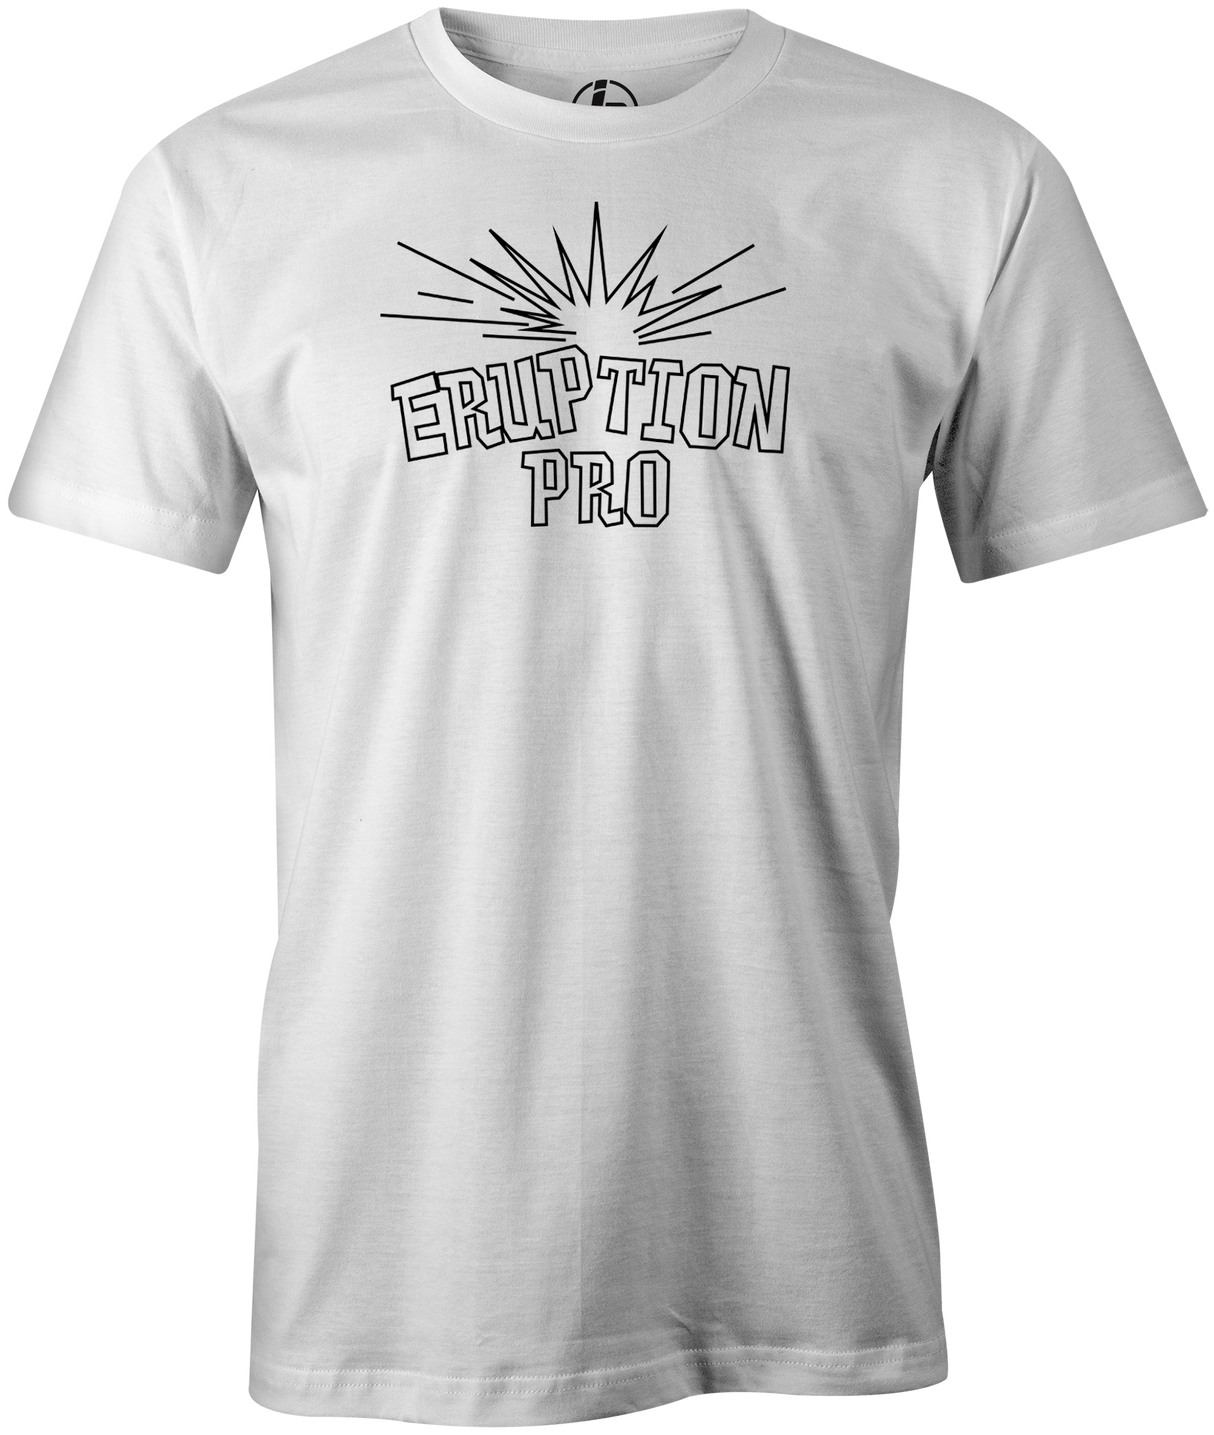 Eruption Pro Men's T-Shirt, White, Bowling, Columbia 300, tshirt, tee, tee-shirt, tee shirt, cool, comfortable.